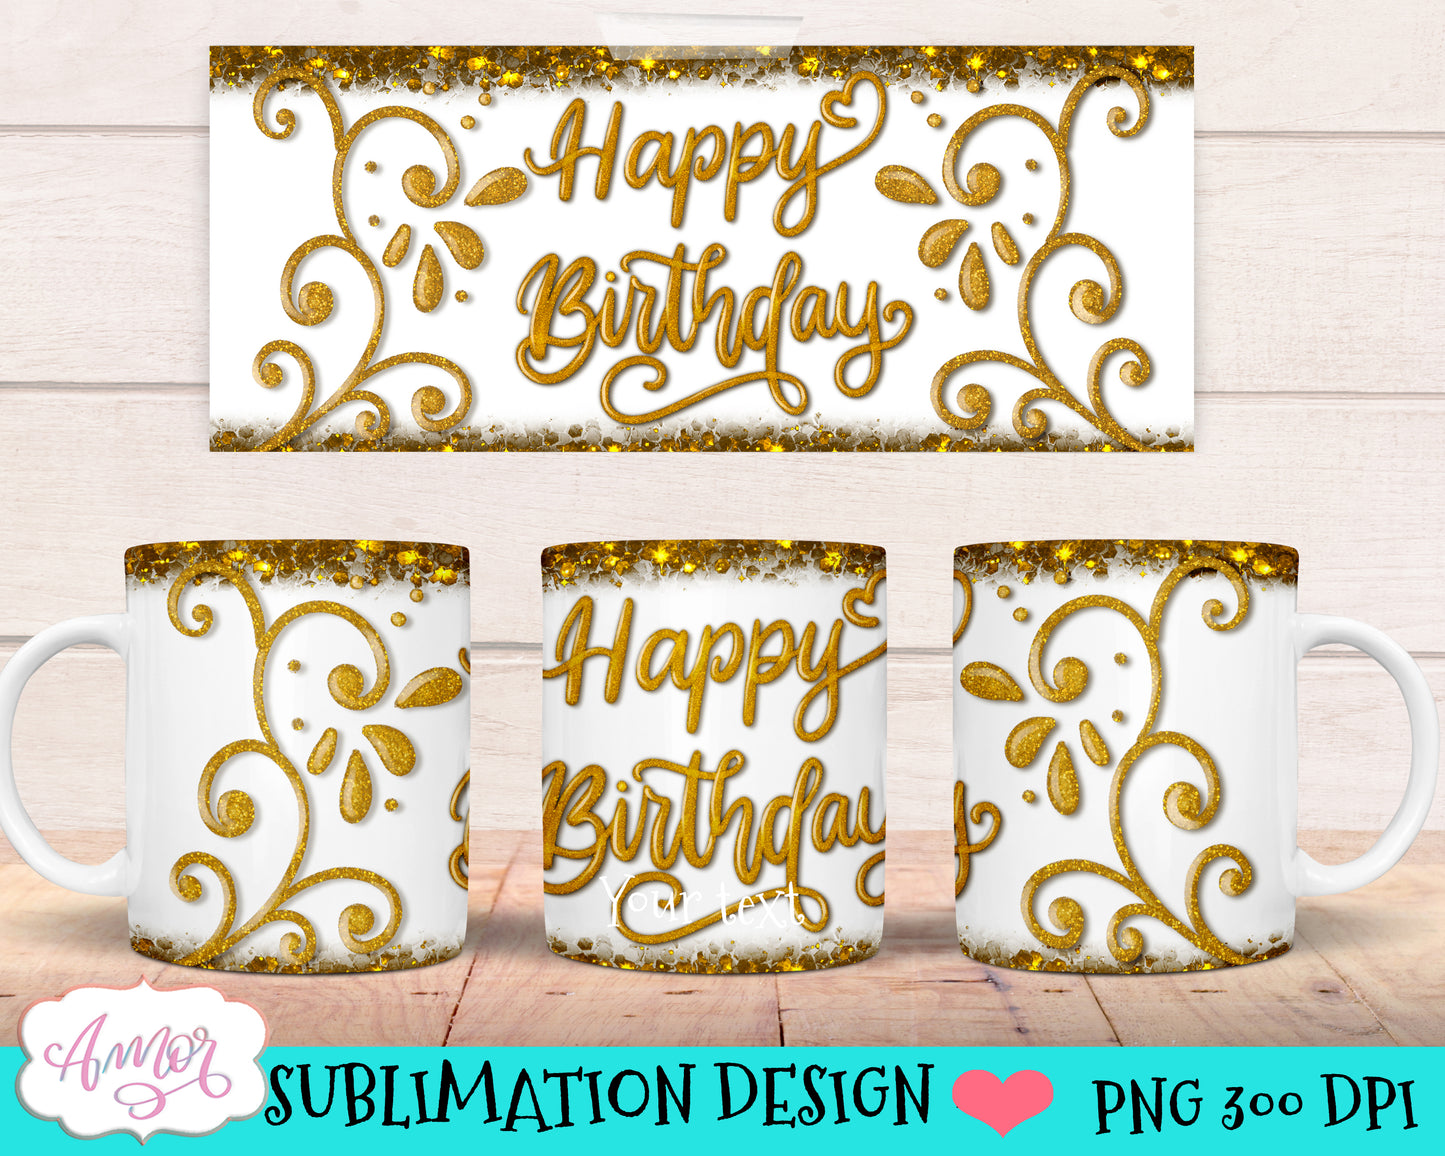 Customizable happy birthday mug wraps PNG for sublimation